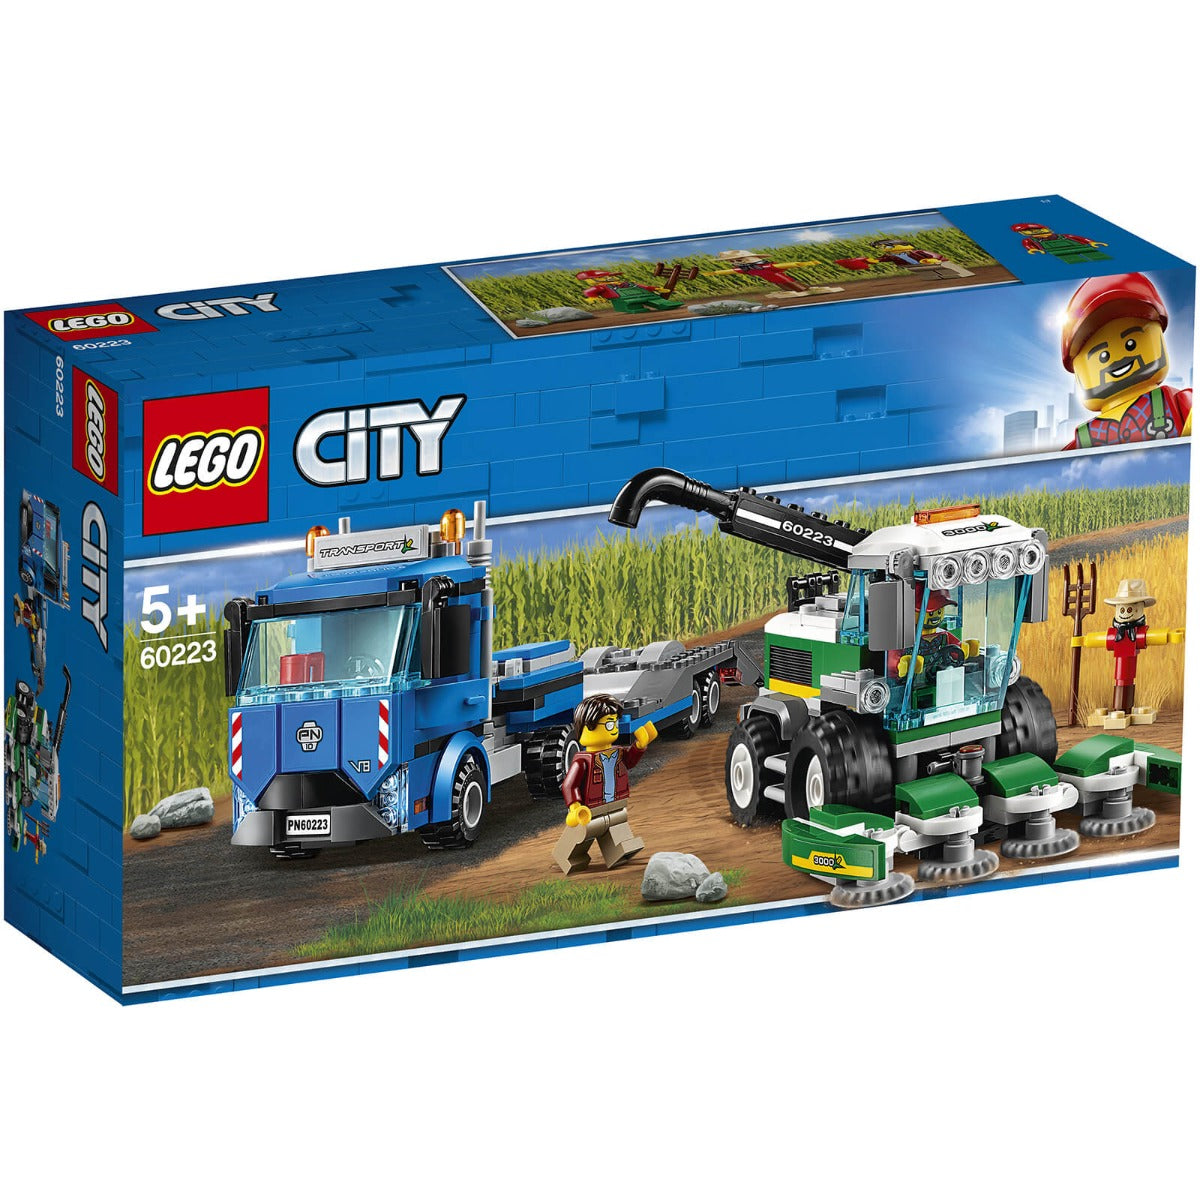 LEGO City Harvester Transport 60223